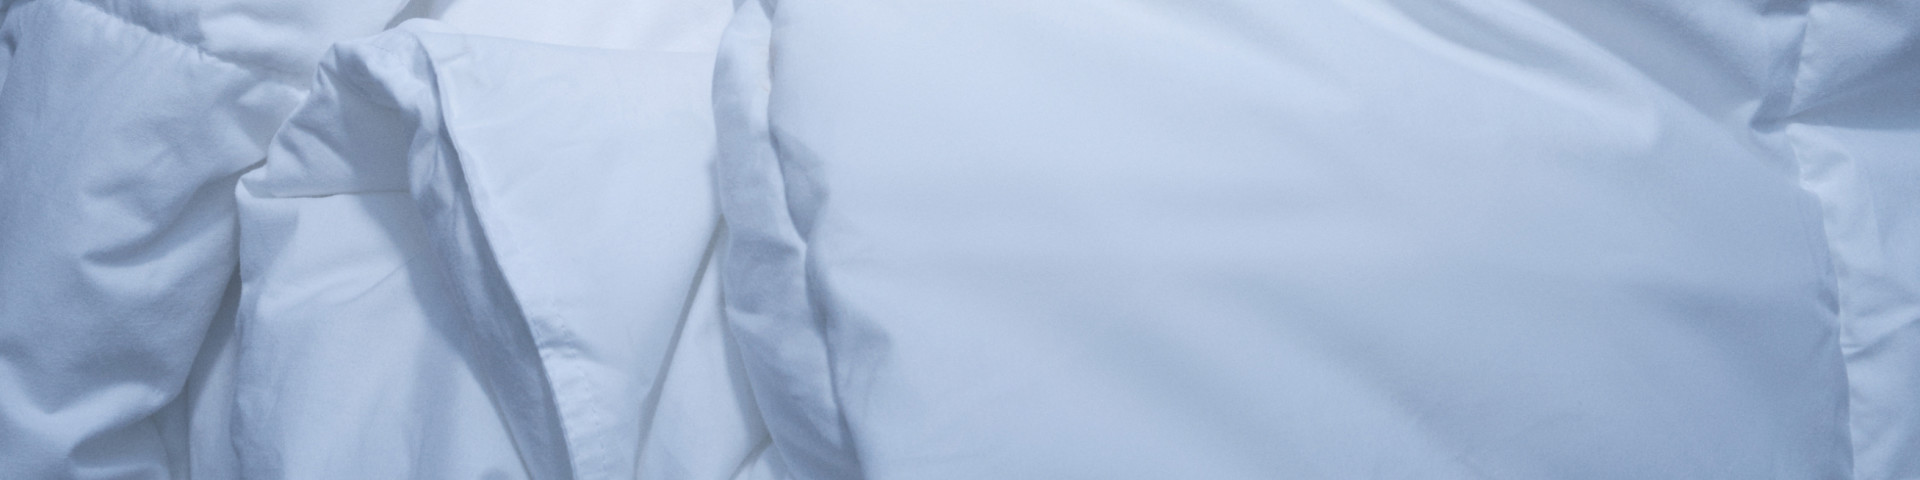 A white comforter.